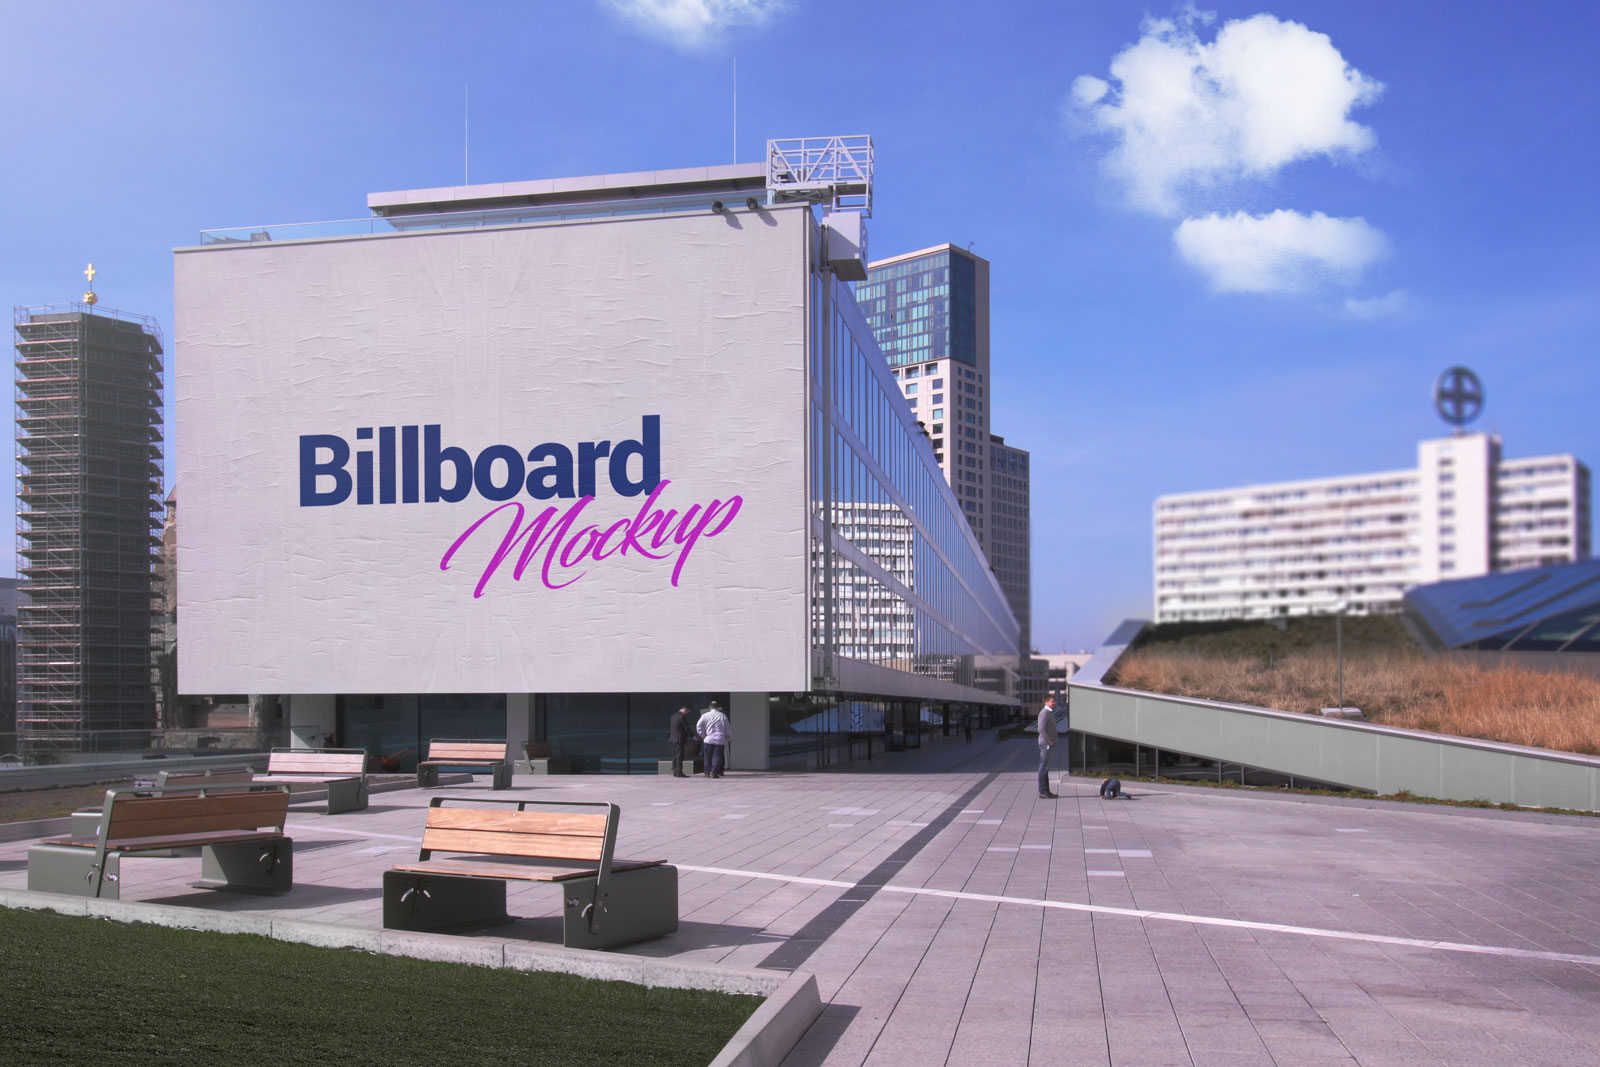 Free-Outdoor-Advertising-Building-Branding-Billboard-Mockup-PSD